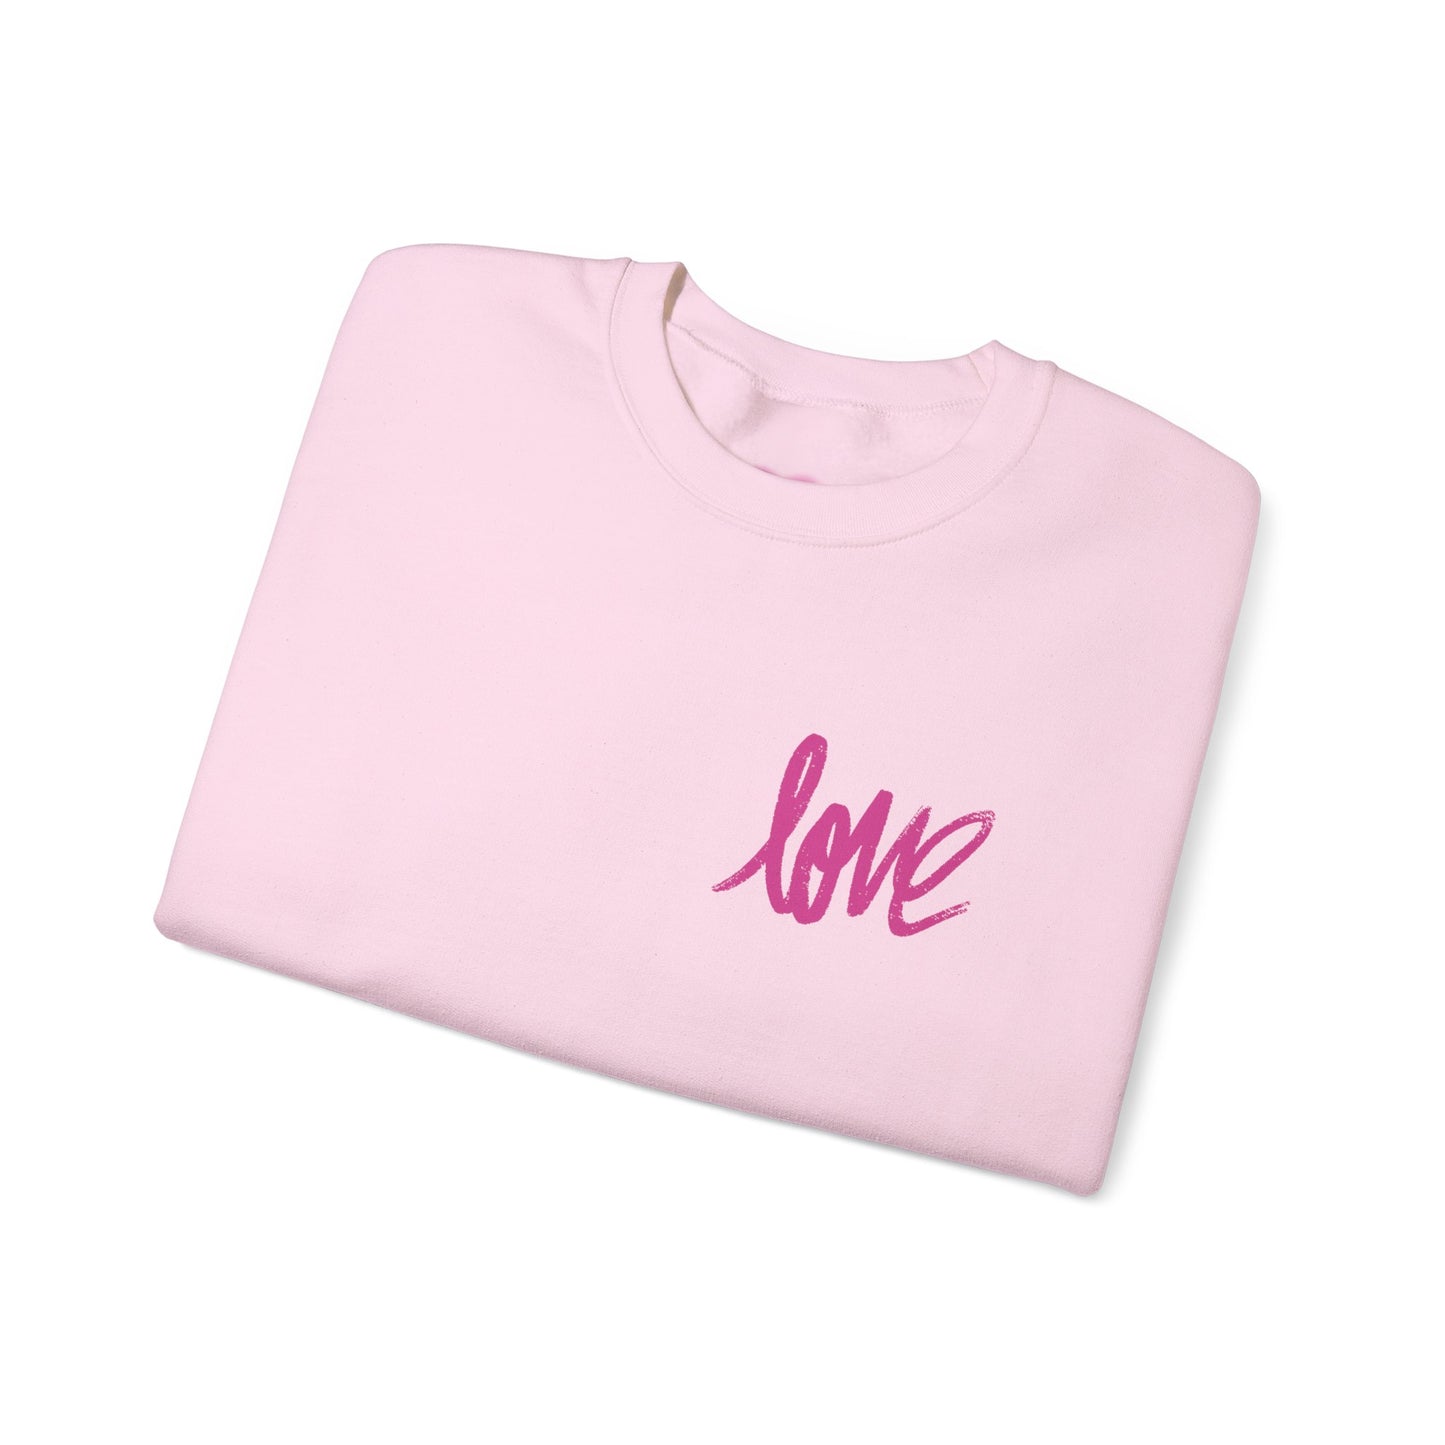 LOVE Shirt, Valentines Day Shirt